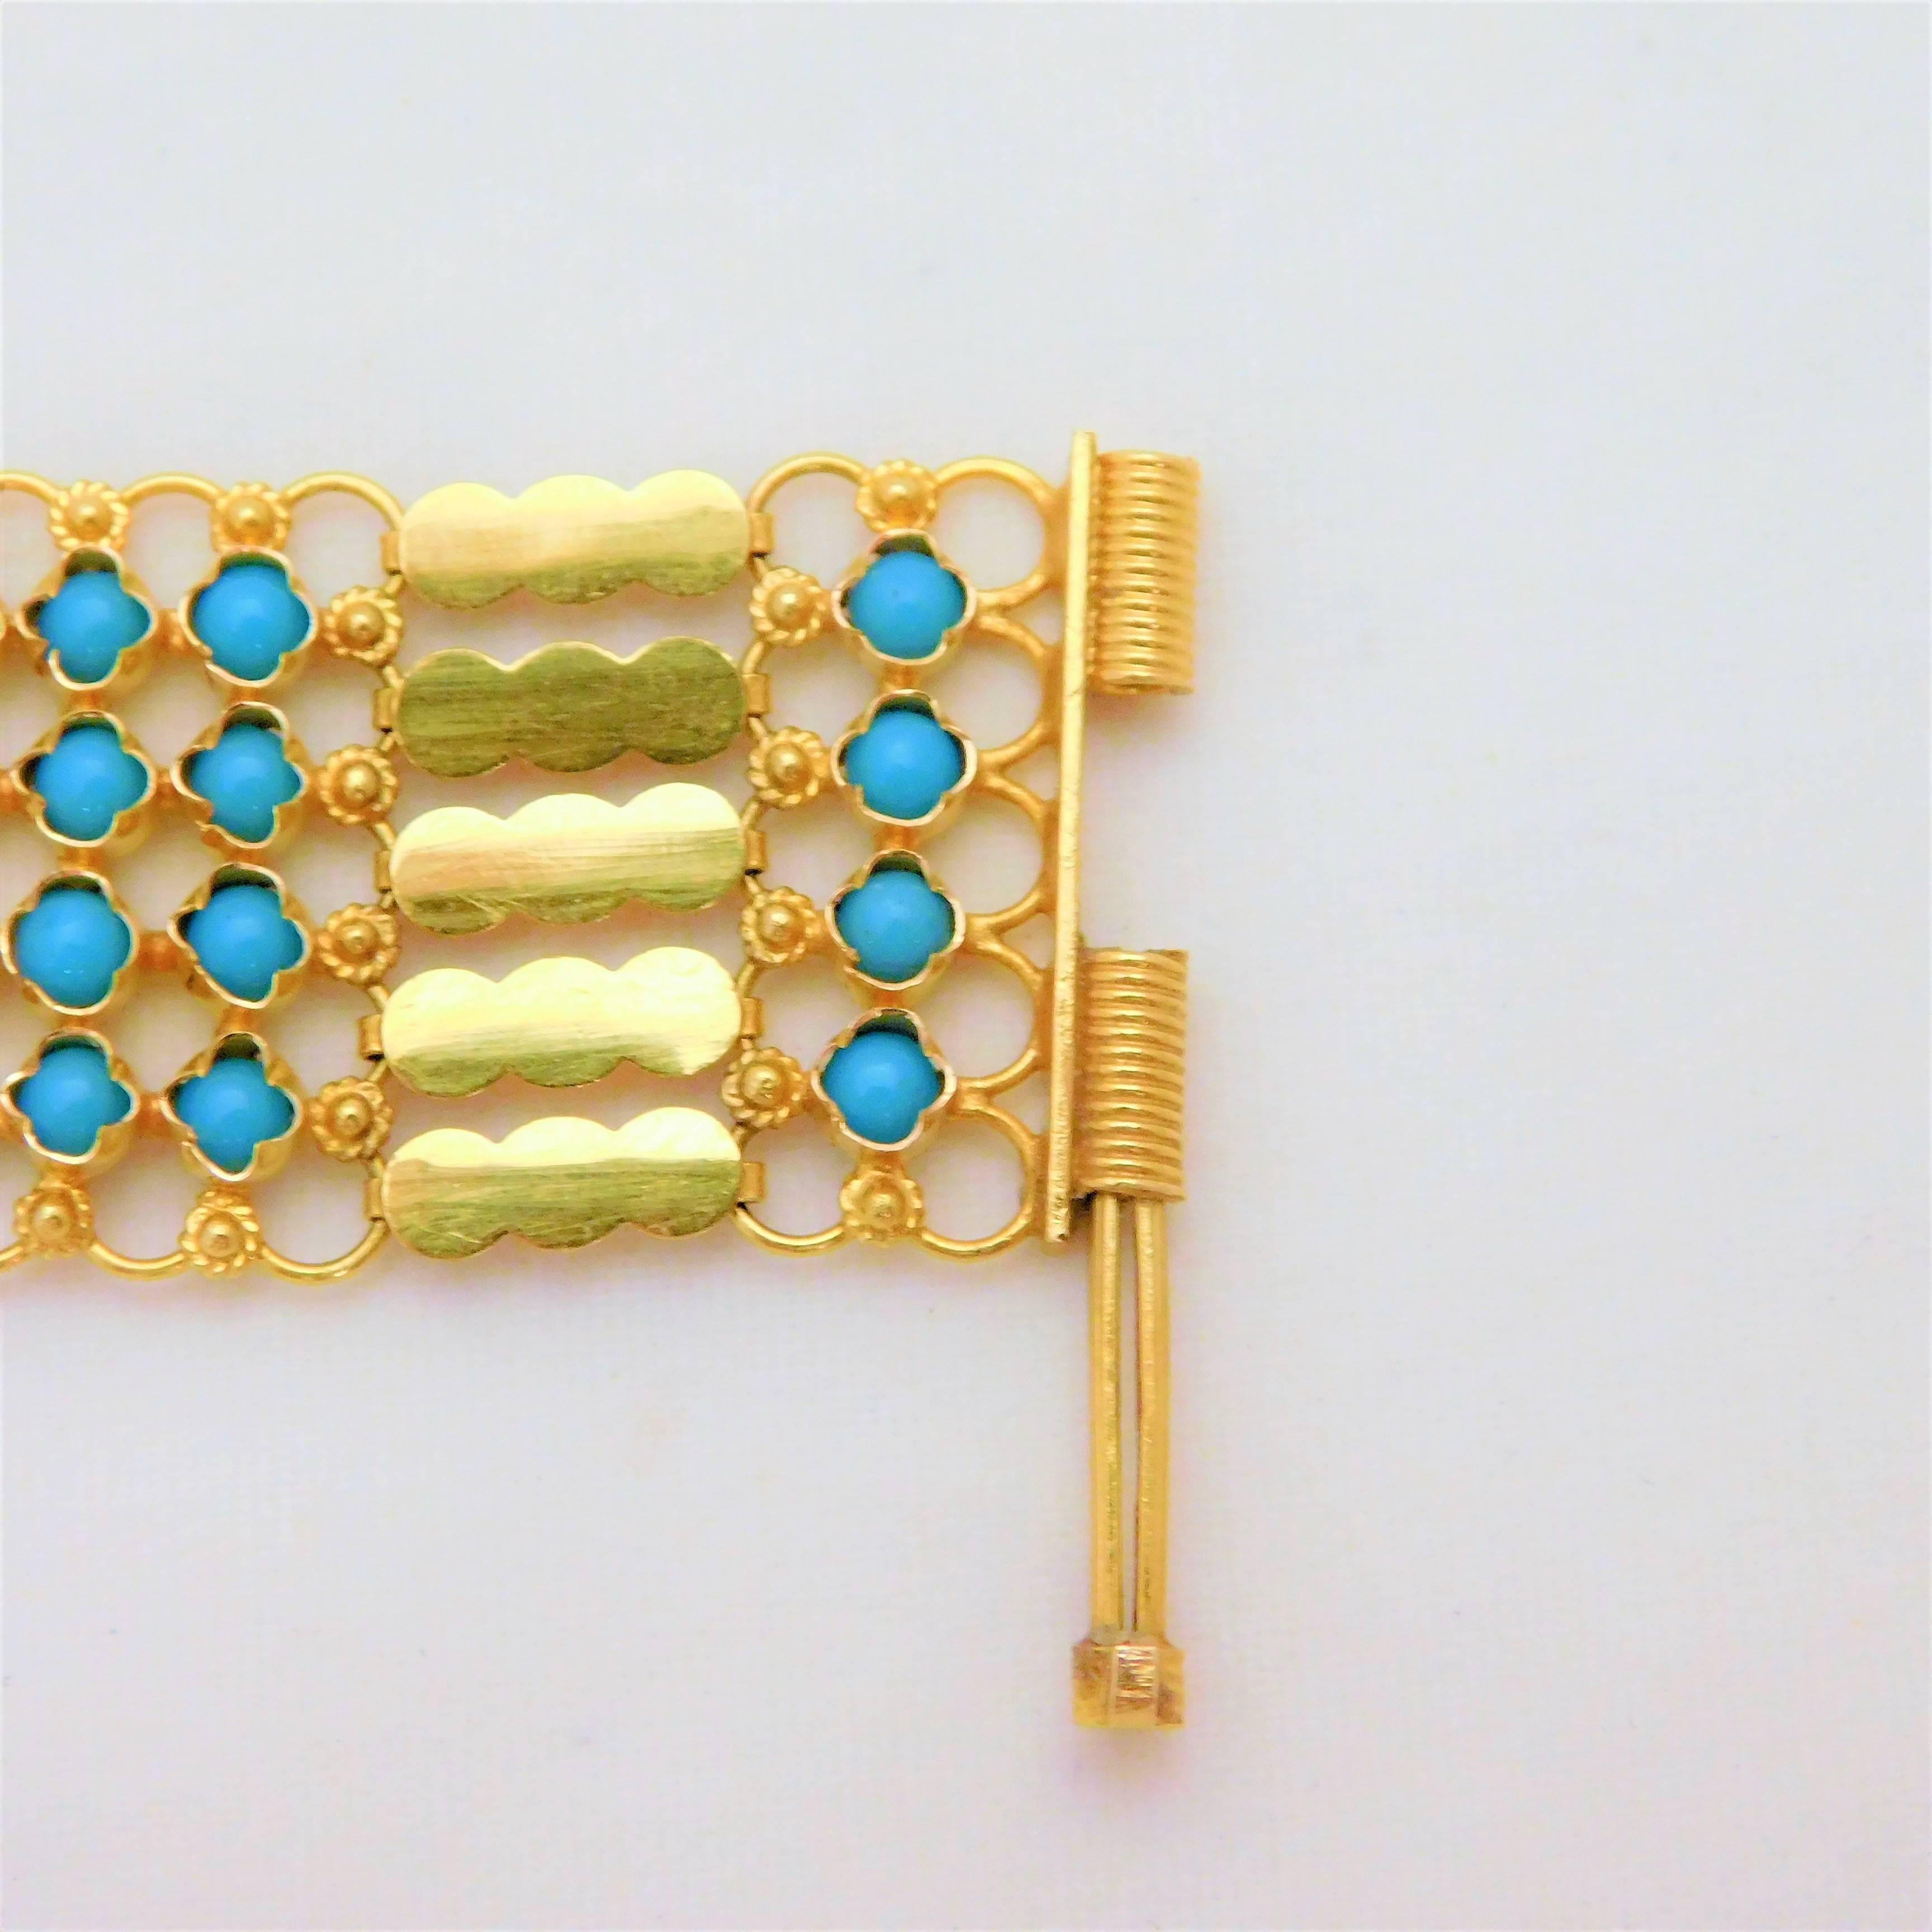 Women's Handcrafted 22 Karat Gold and Turquoise Dubai Bracelet